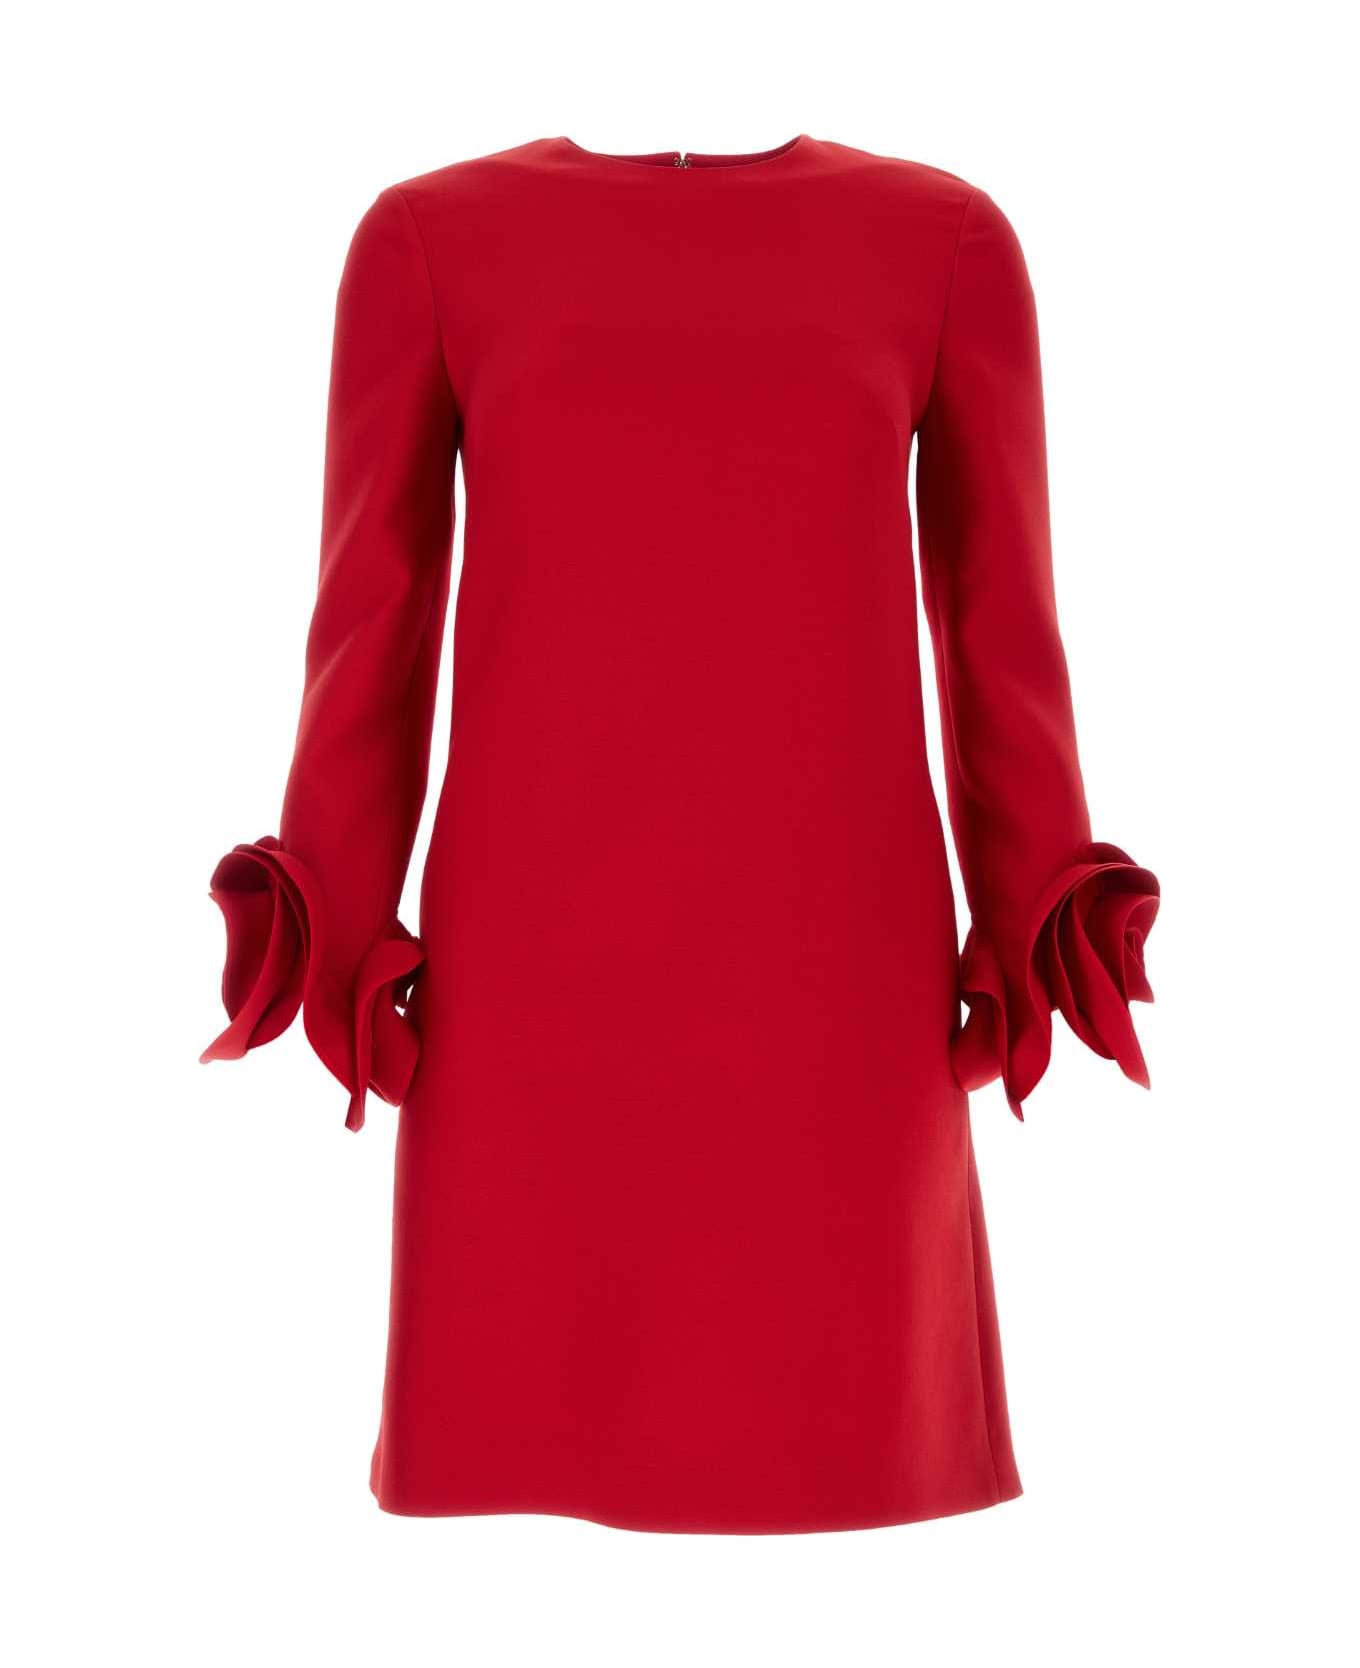 Valentino Garavani Red Wool Blend Dress - ROSSO